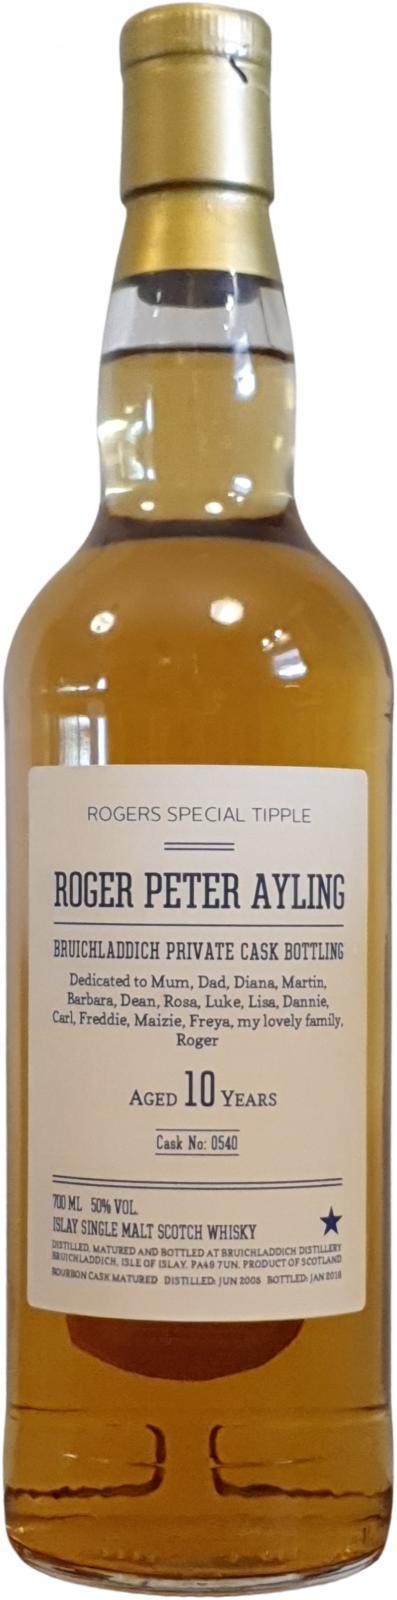 Bruichladdich 2005 Private Cask Bottling #0540 Roger Peter Ayling 50% 700ml